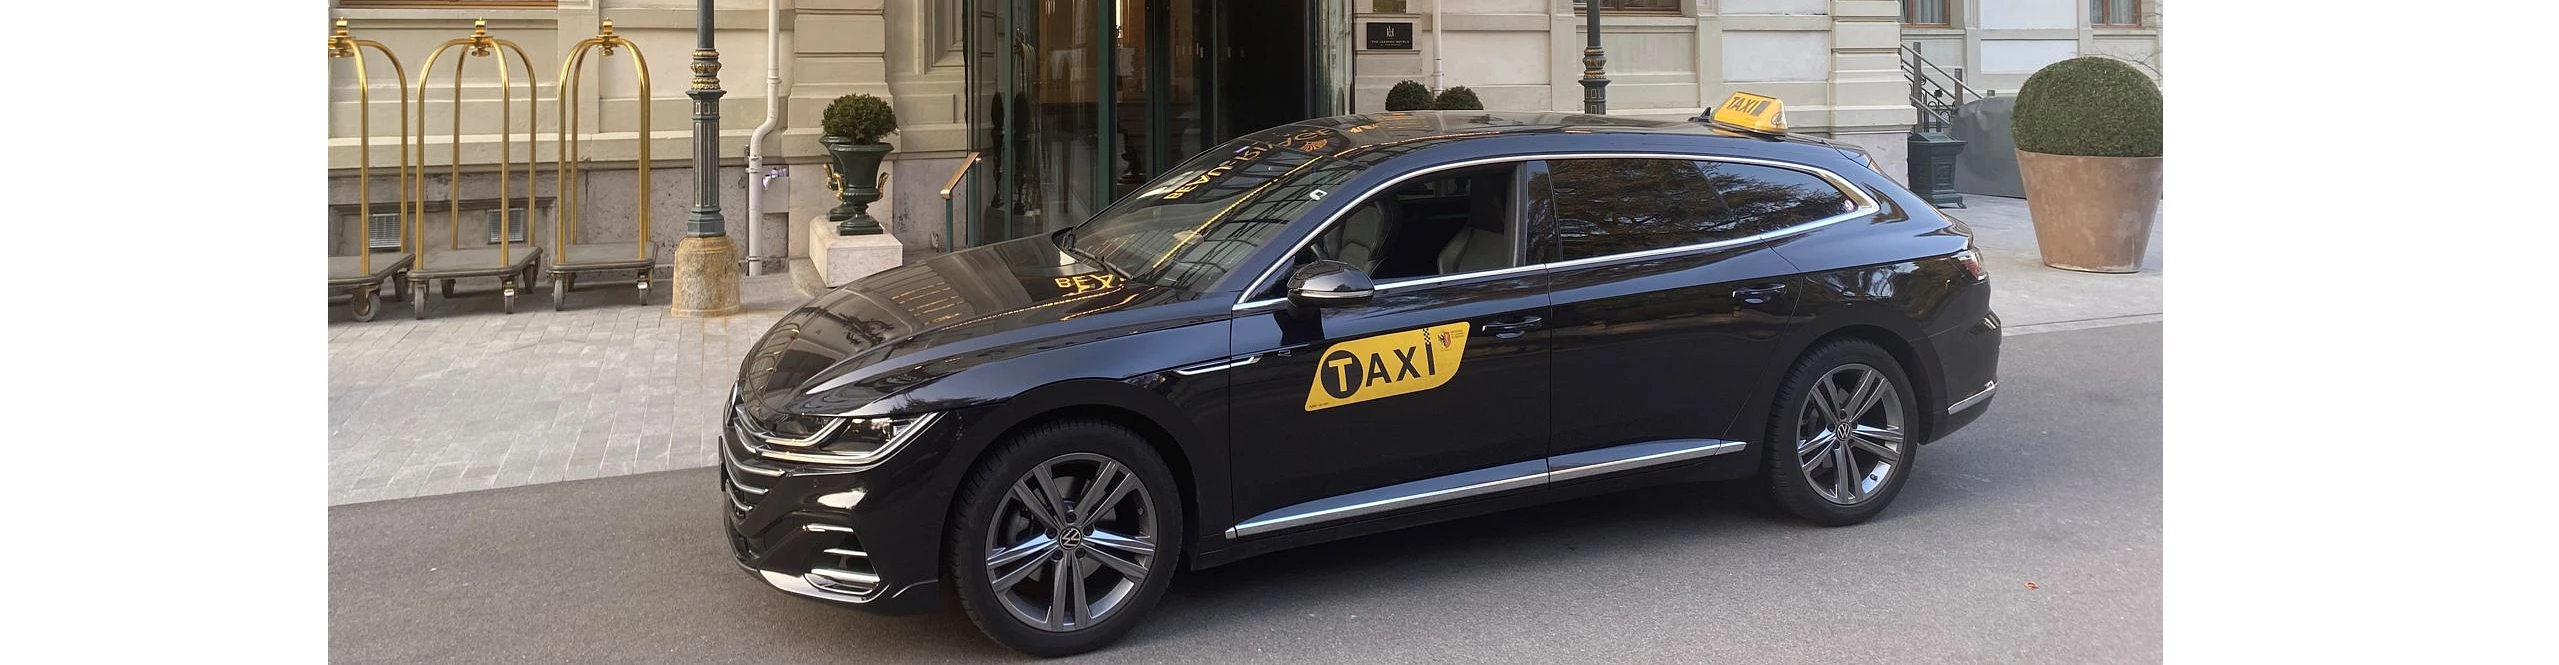 Genève Taxi